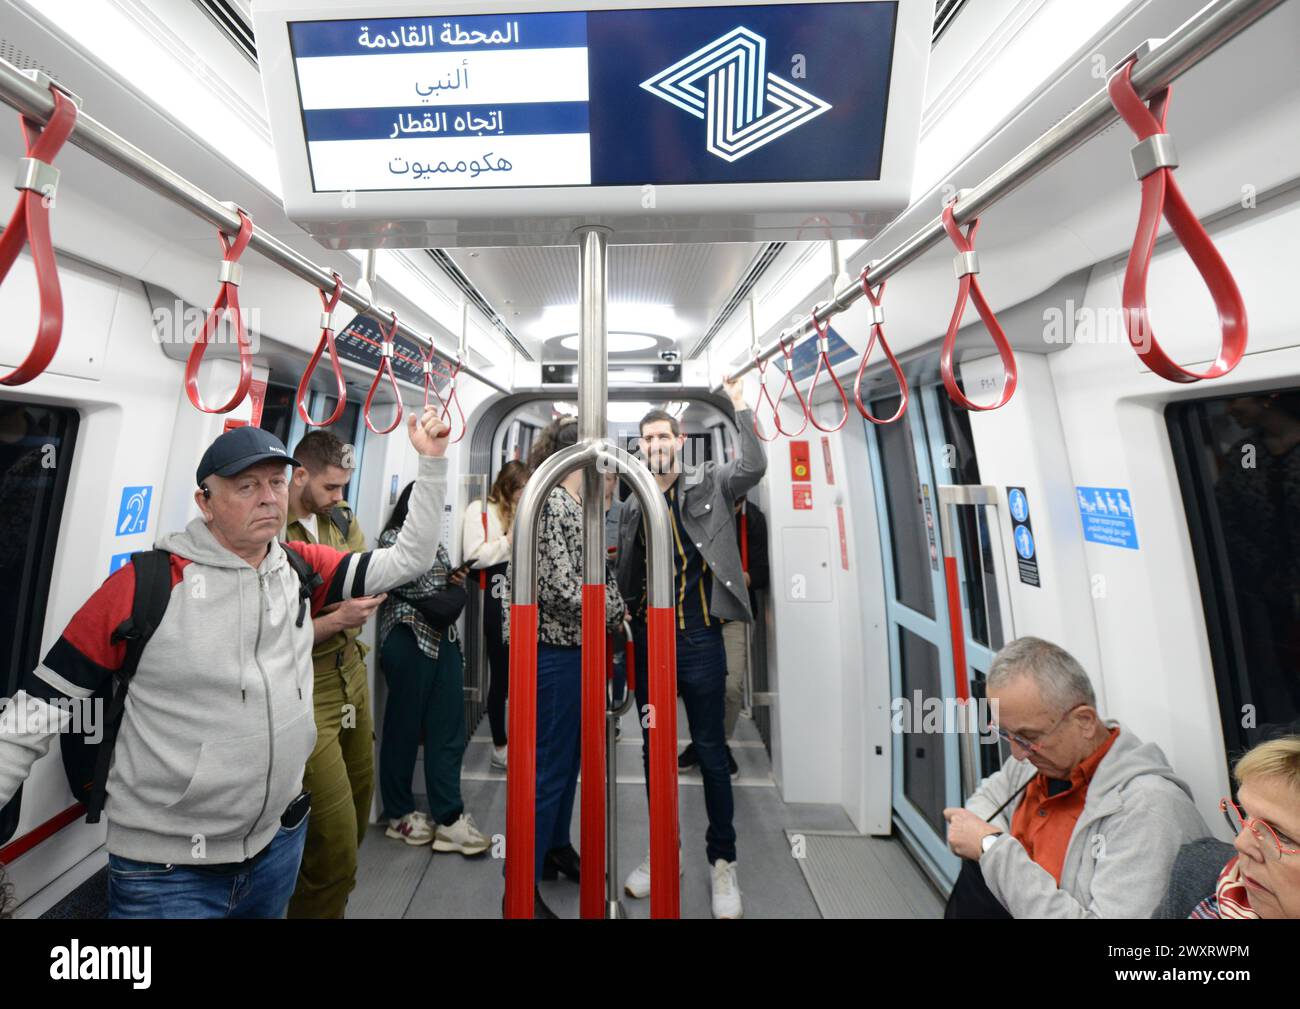 Passengers riding on the modern light railway train in Tel-Aviv, Israel. Stock Photo